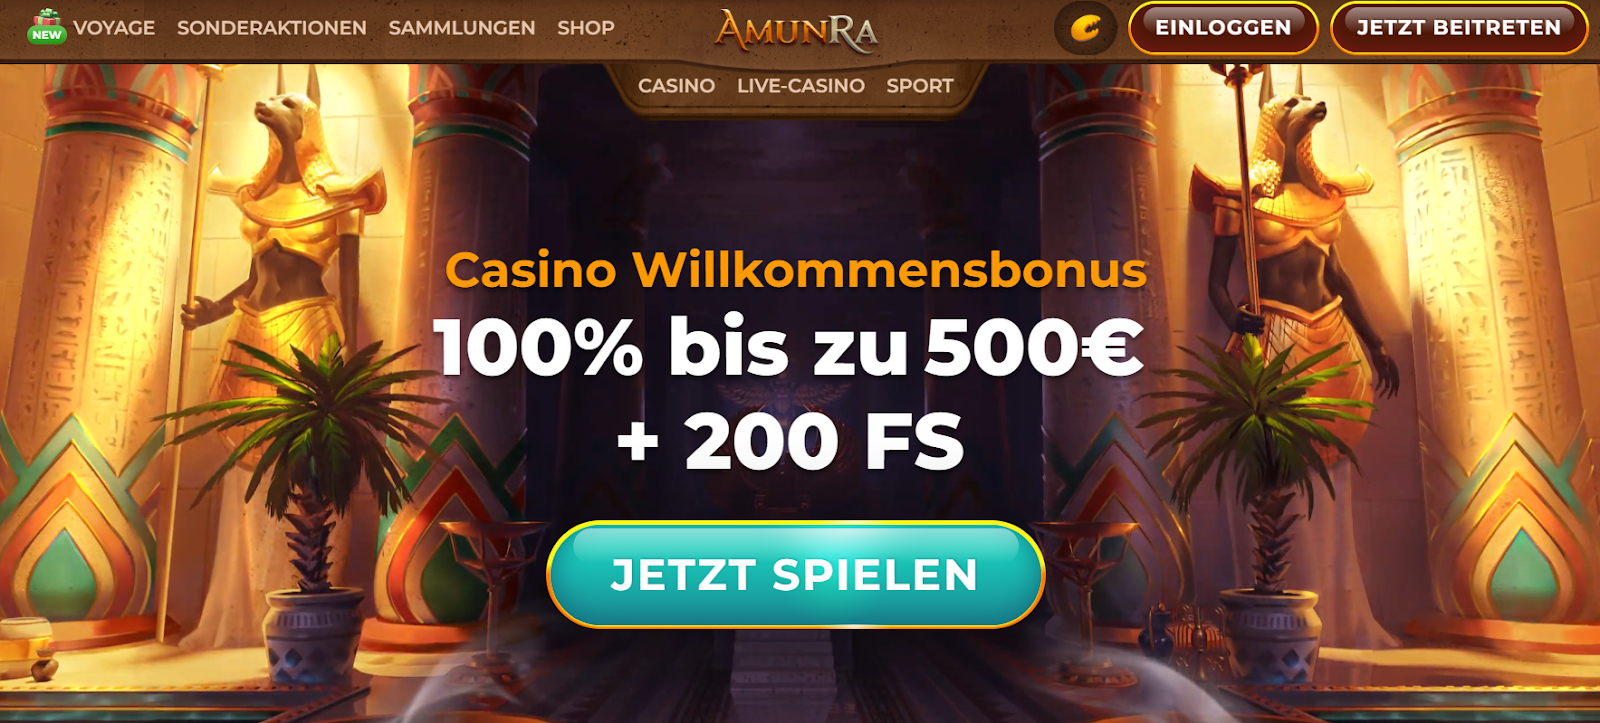 amunra casino, online casino